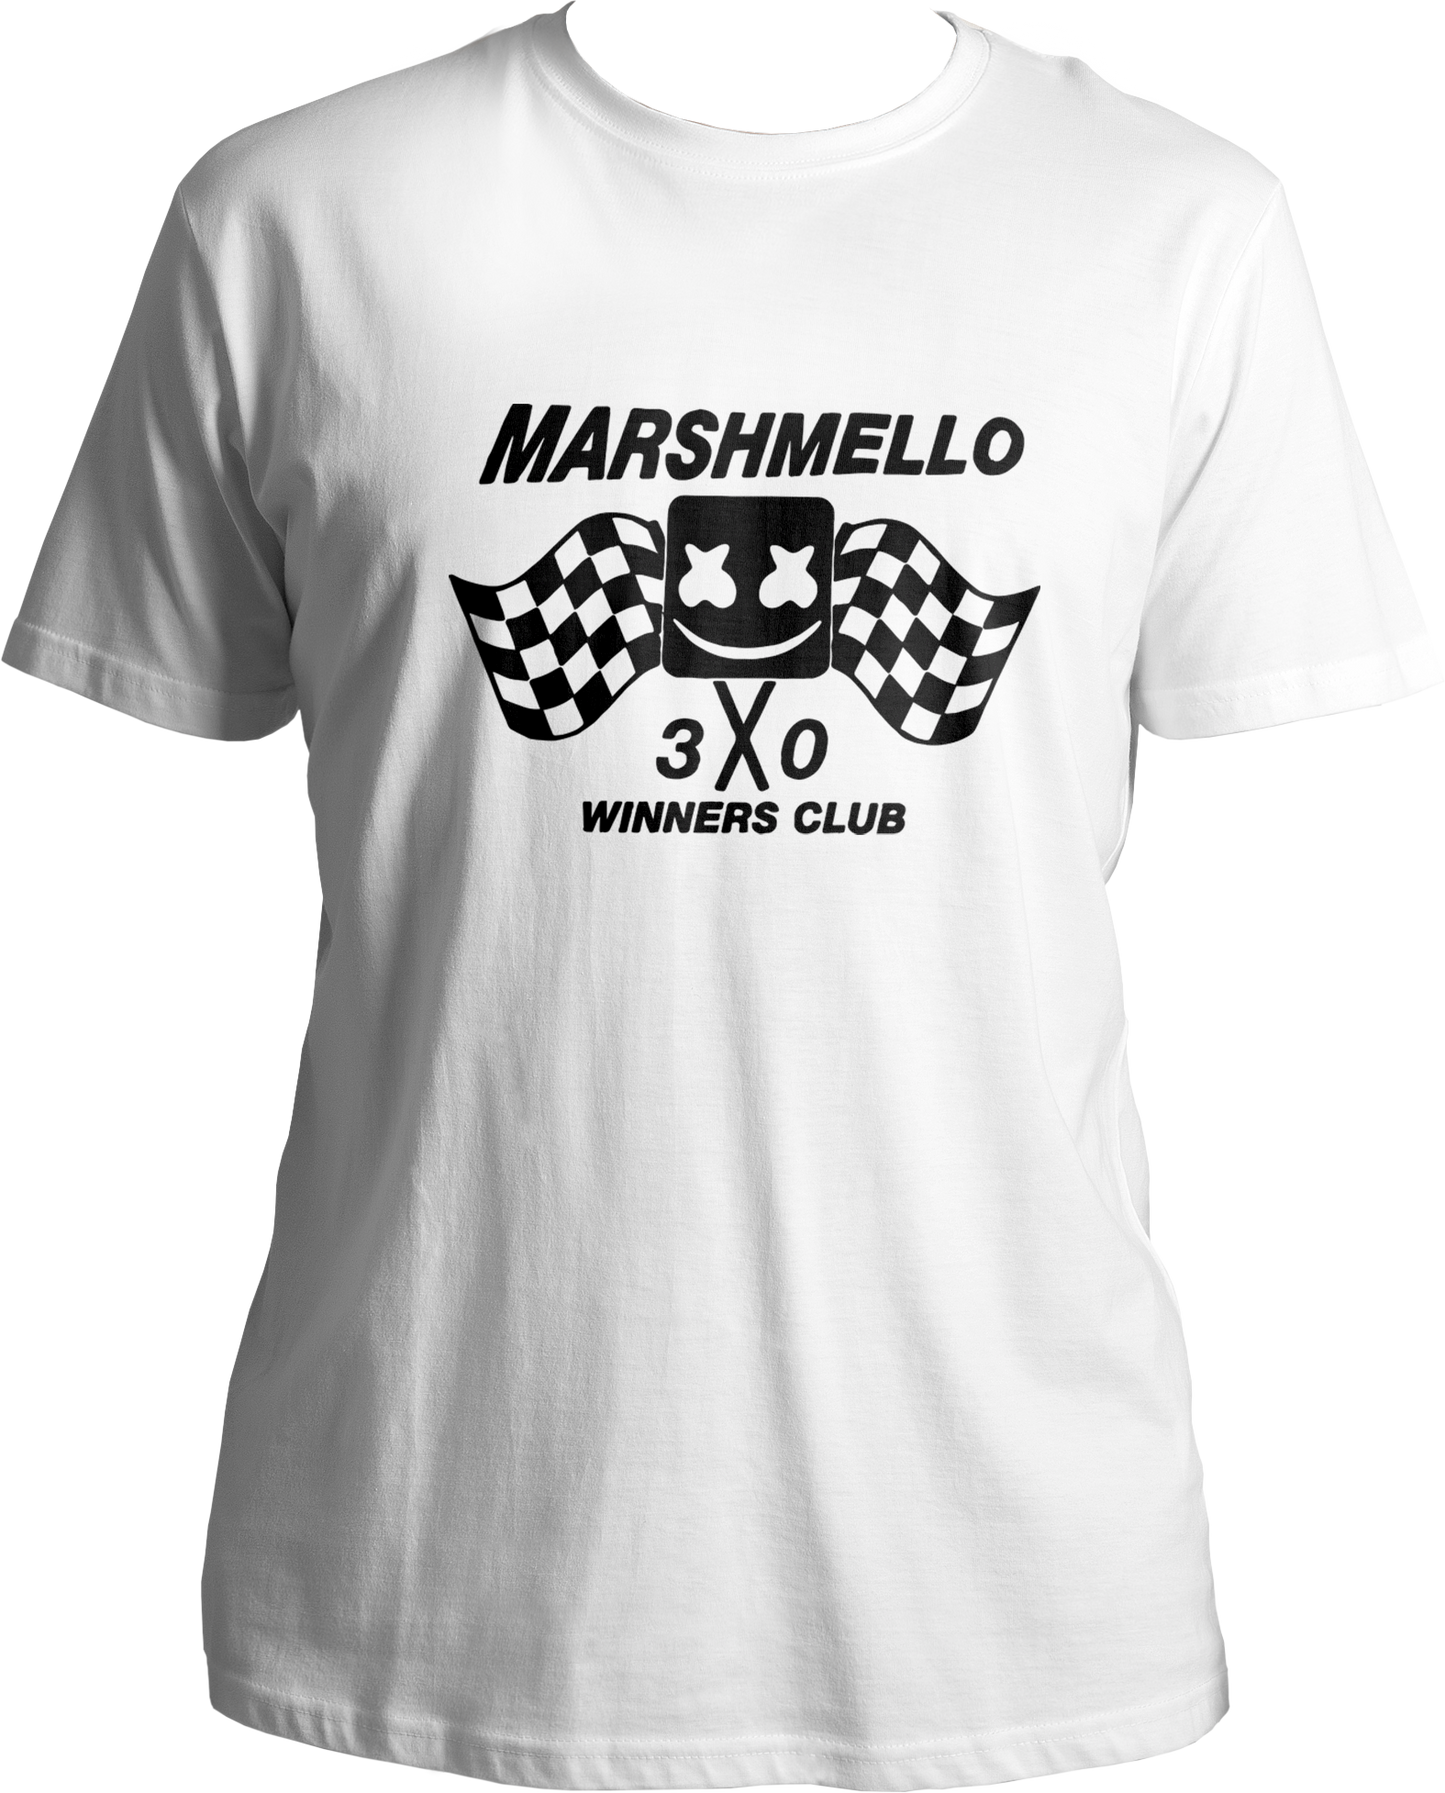 Marshmello Winners Club Unisex T-Shirts